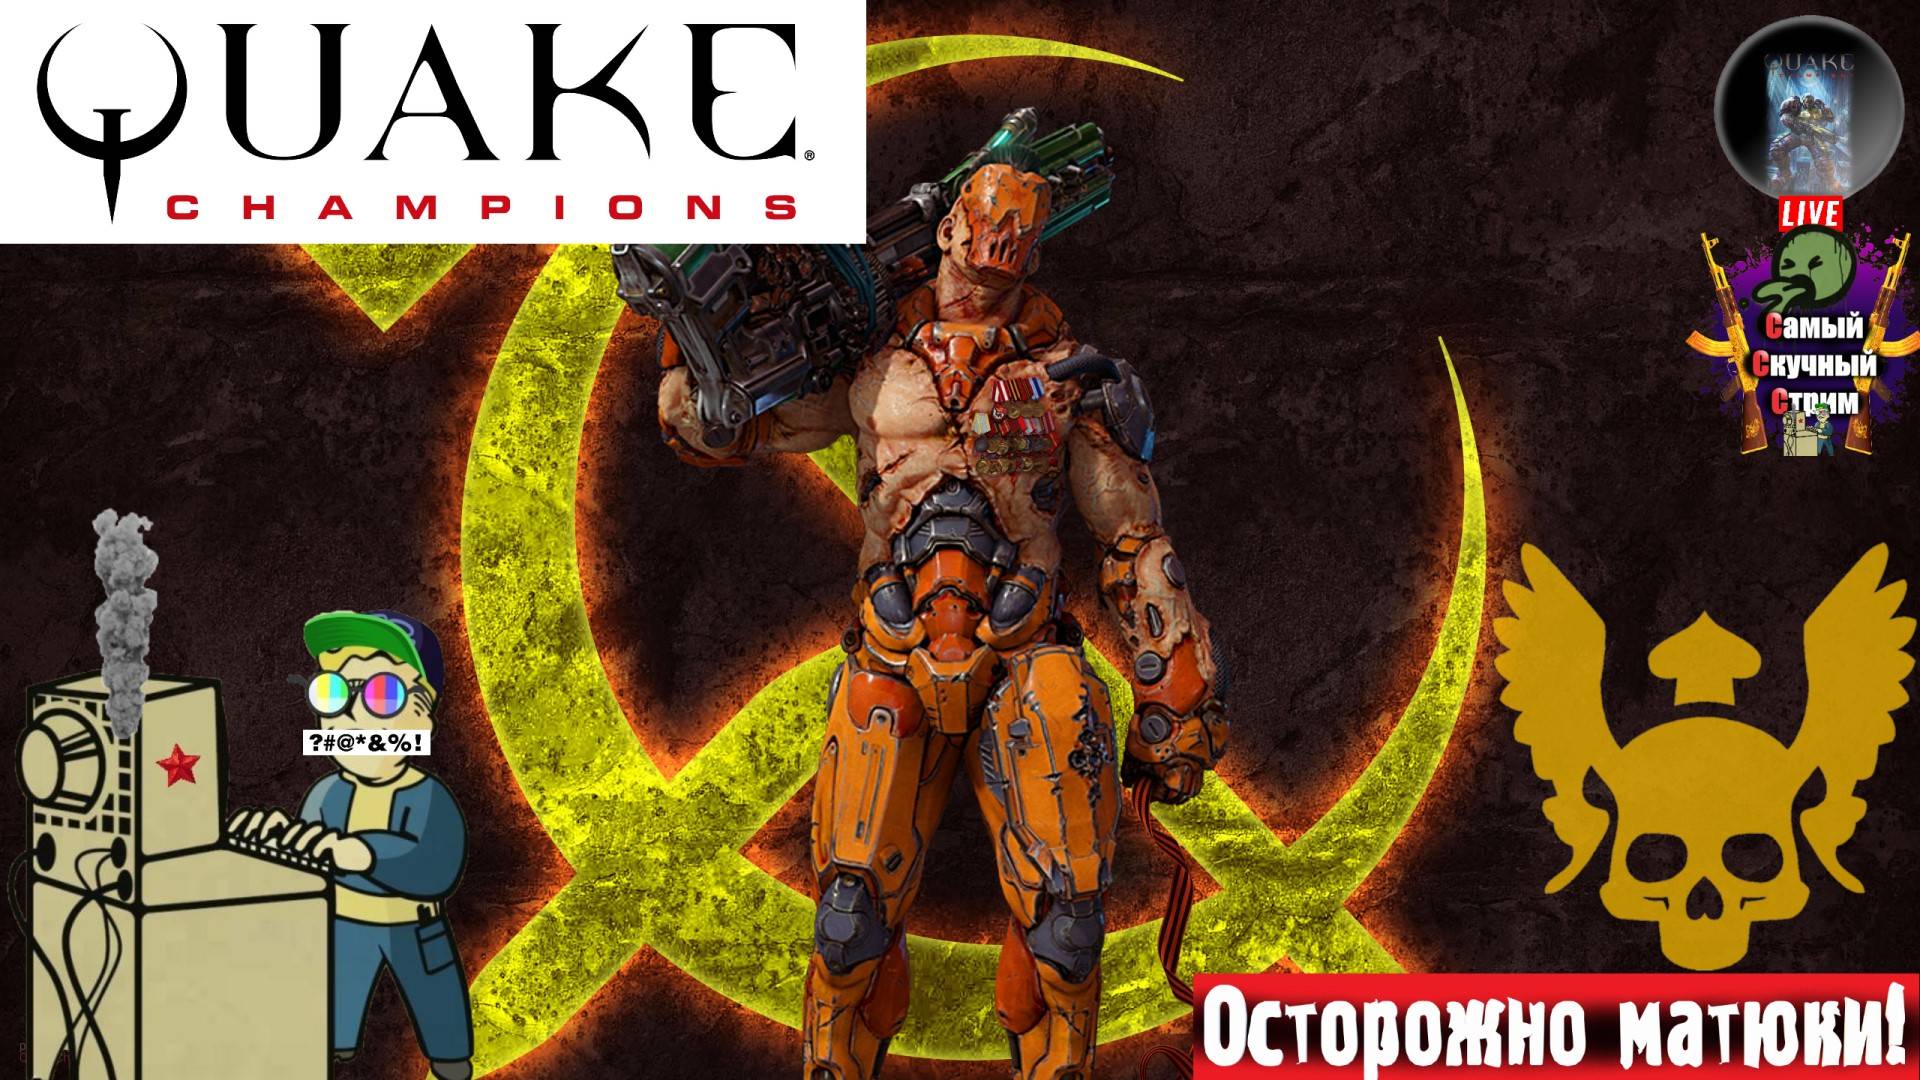 Quake Champions | Квейк Чампионс Квага | Стрельбище  #quake #стрим #лифтремонт